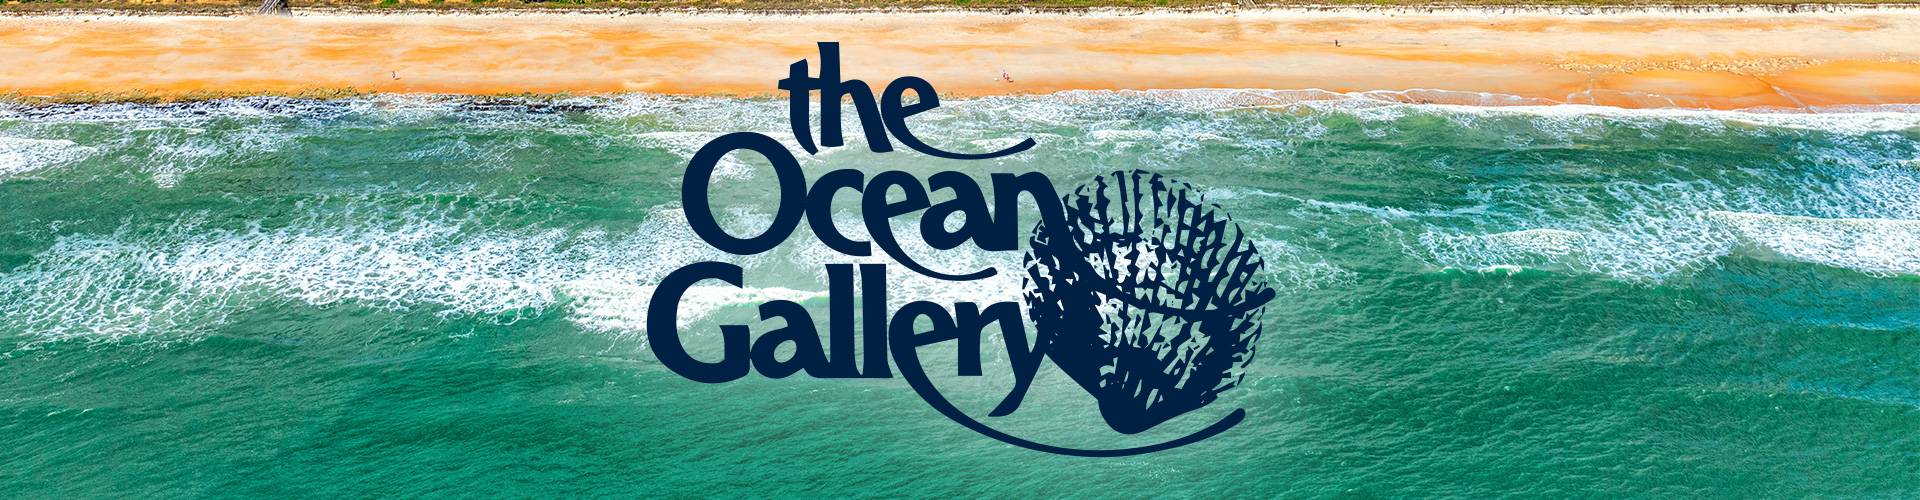 The Ocean Gallery Banner